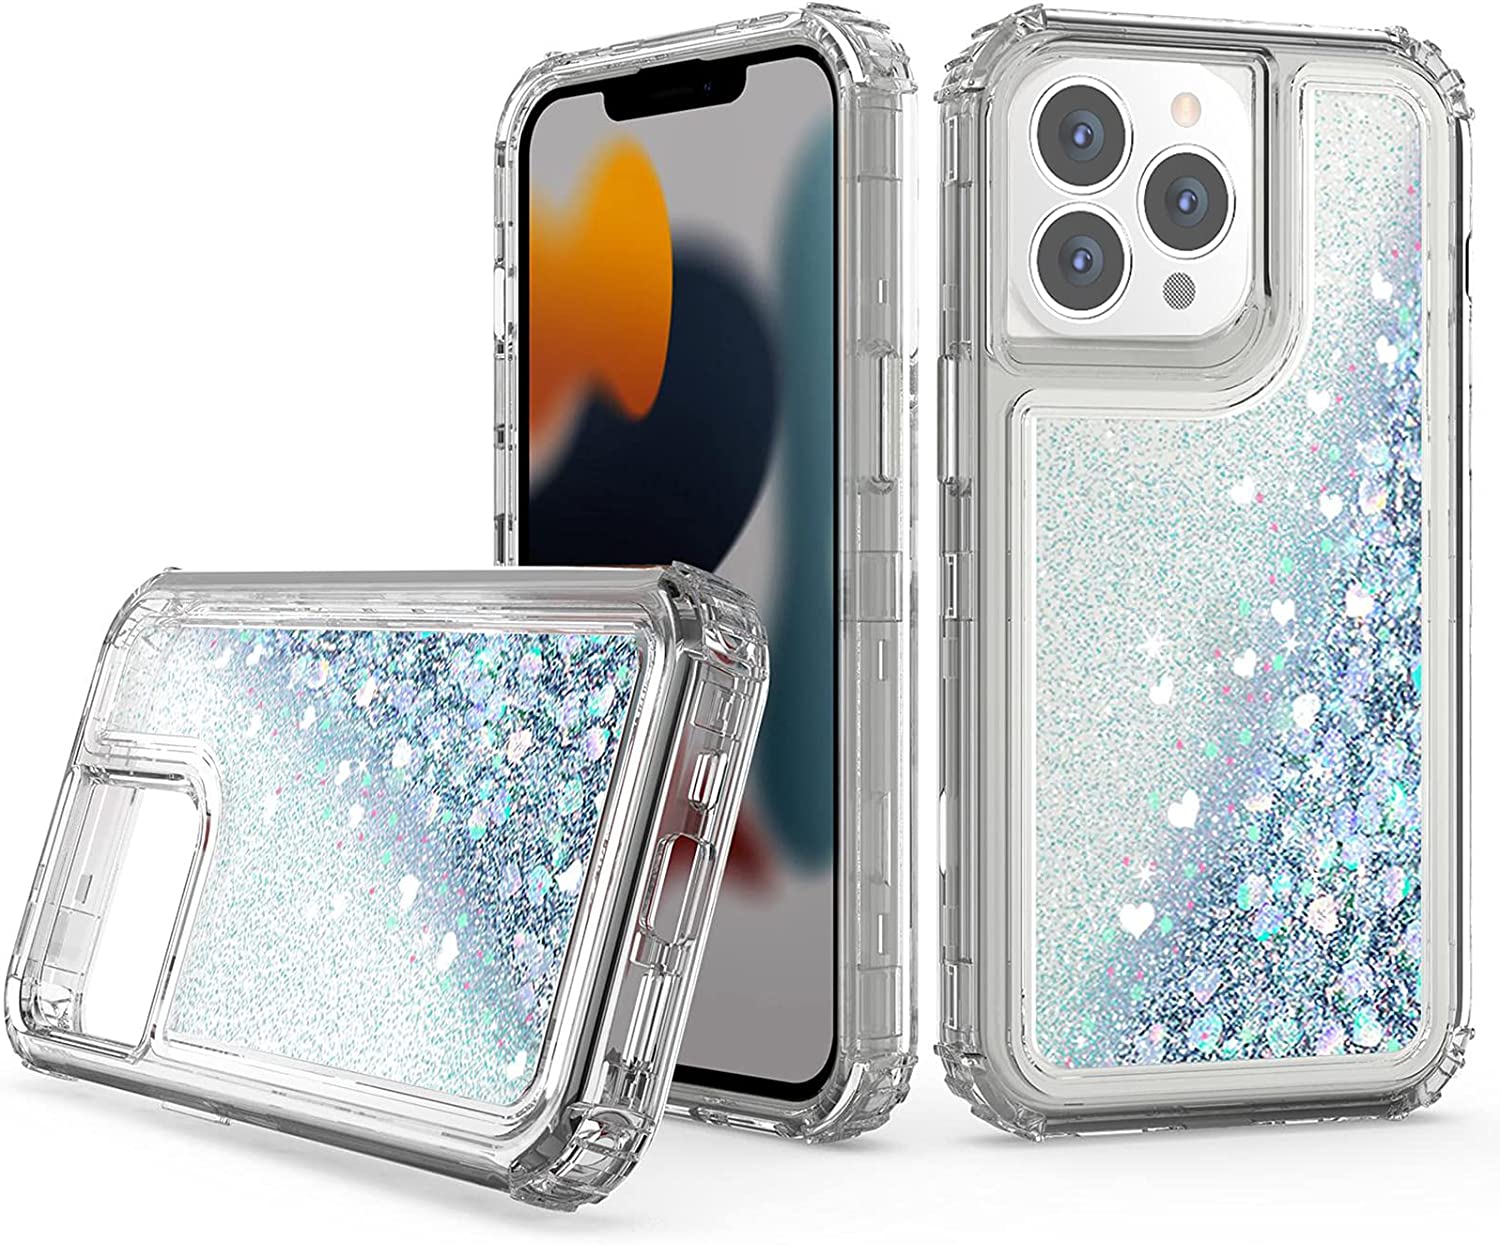 Hybrid Glitter Case For Iphone 11 Pro 5.8"